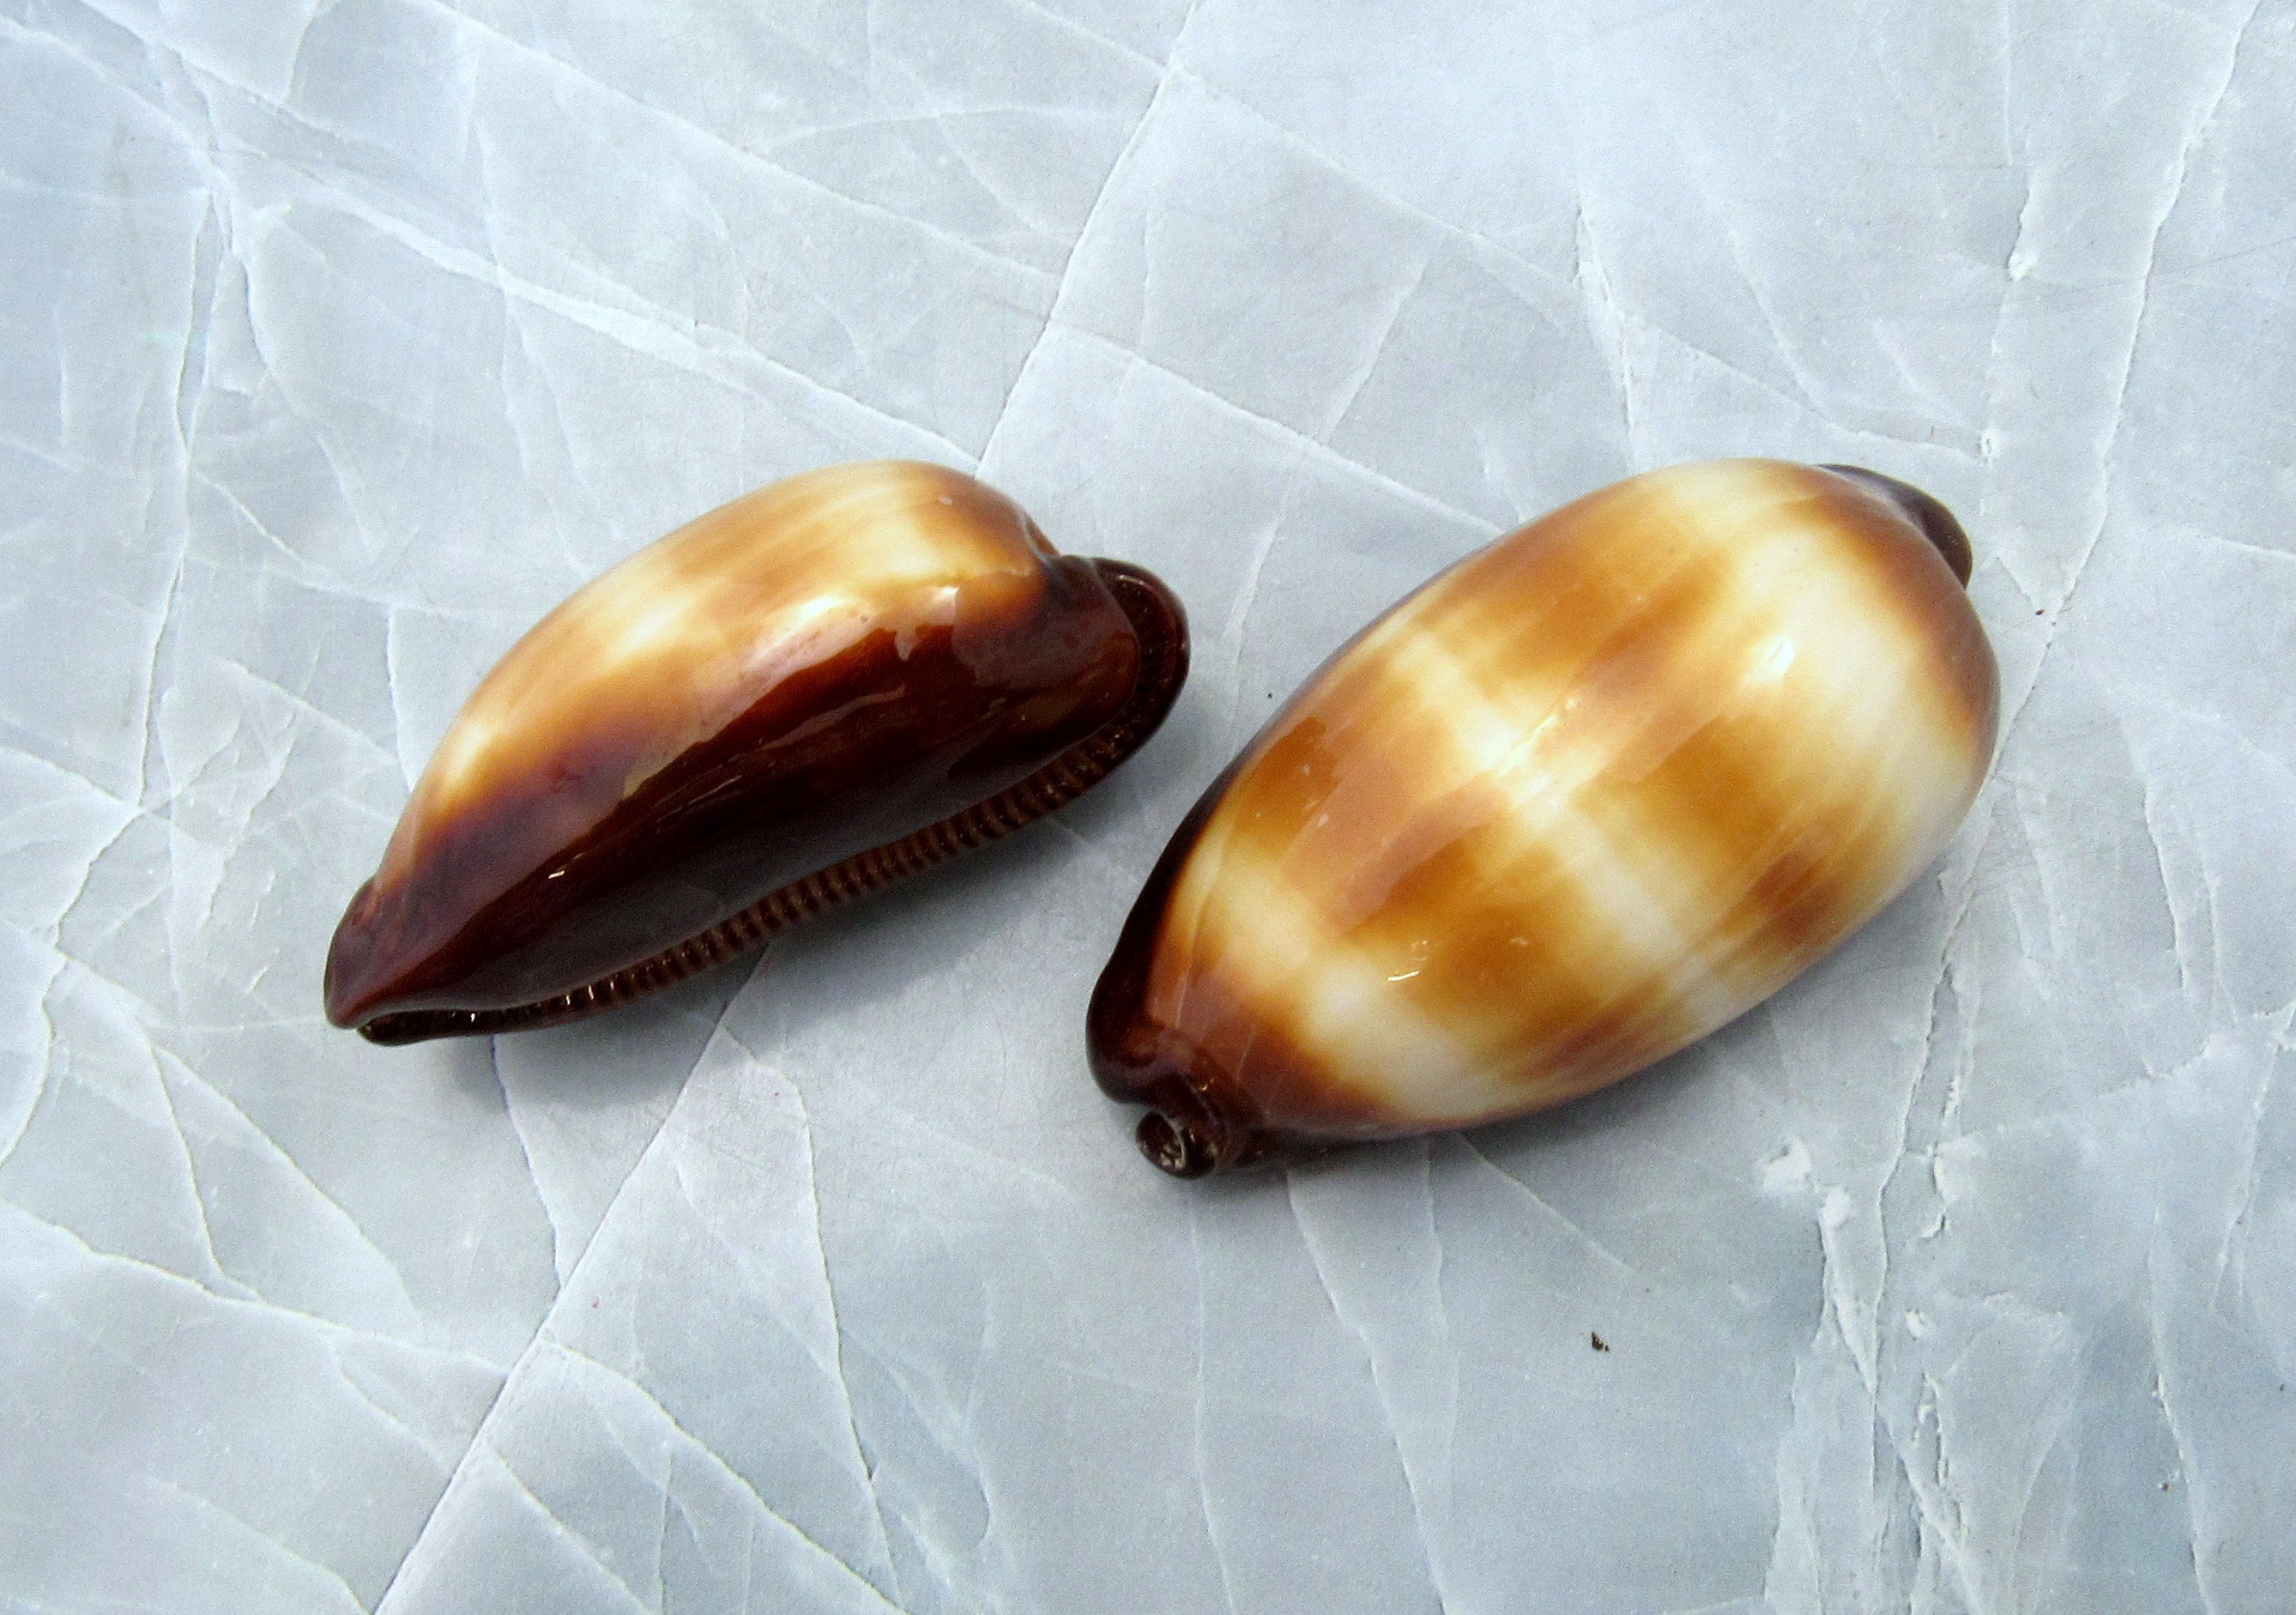 Mole Cowrie Shells - Cypraea Talpa - (2 shells approx. 2 inches